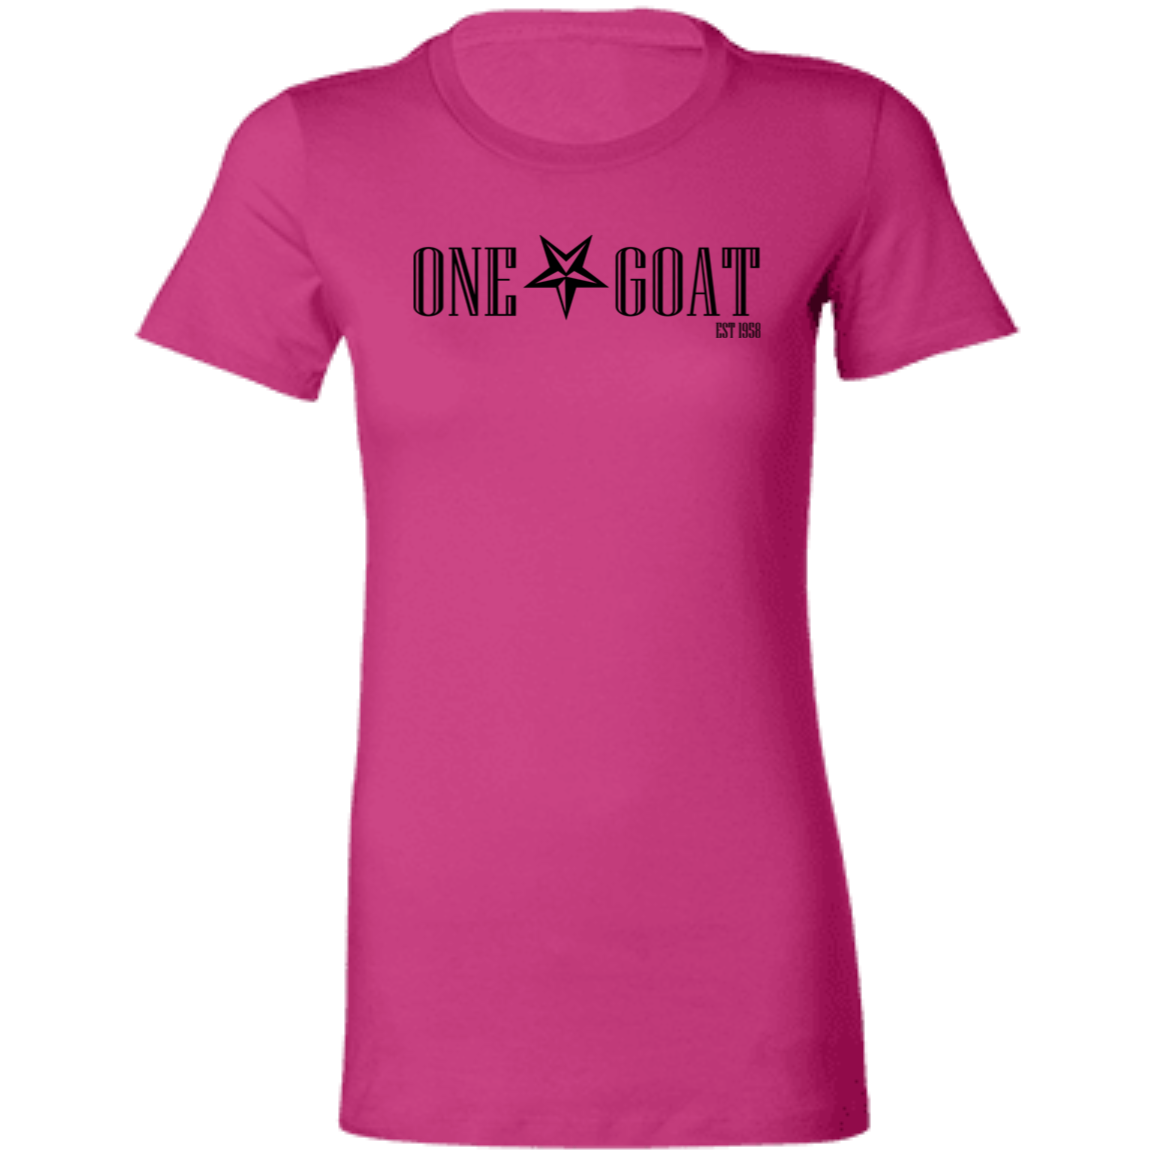 One Star Goat Ladies' Favorite T-Shirt